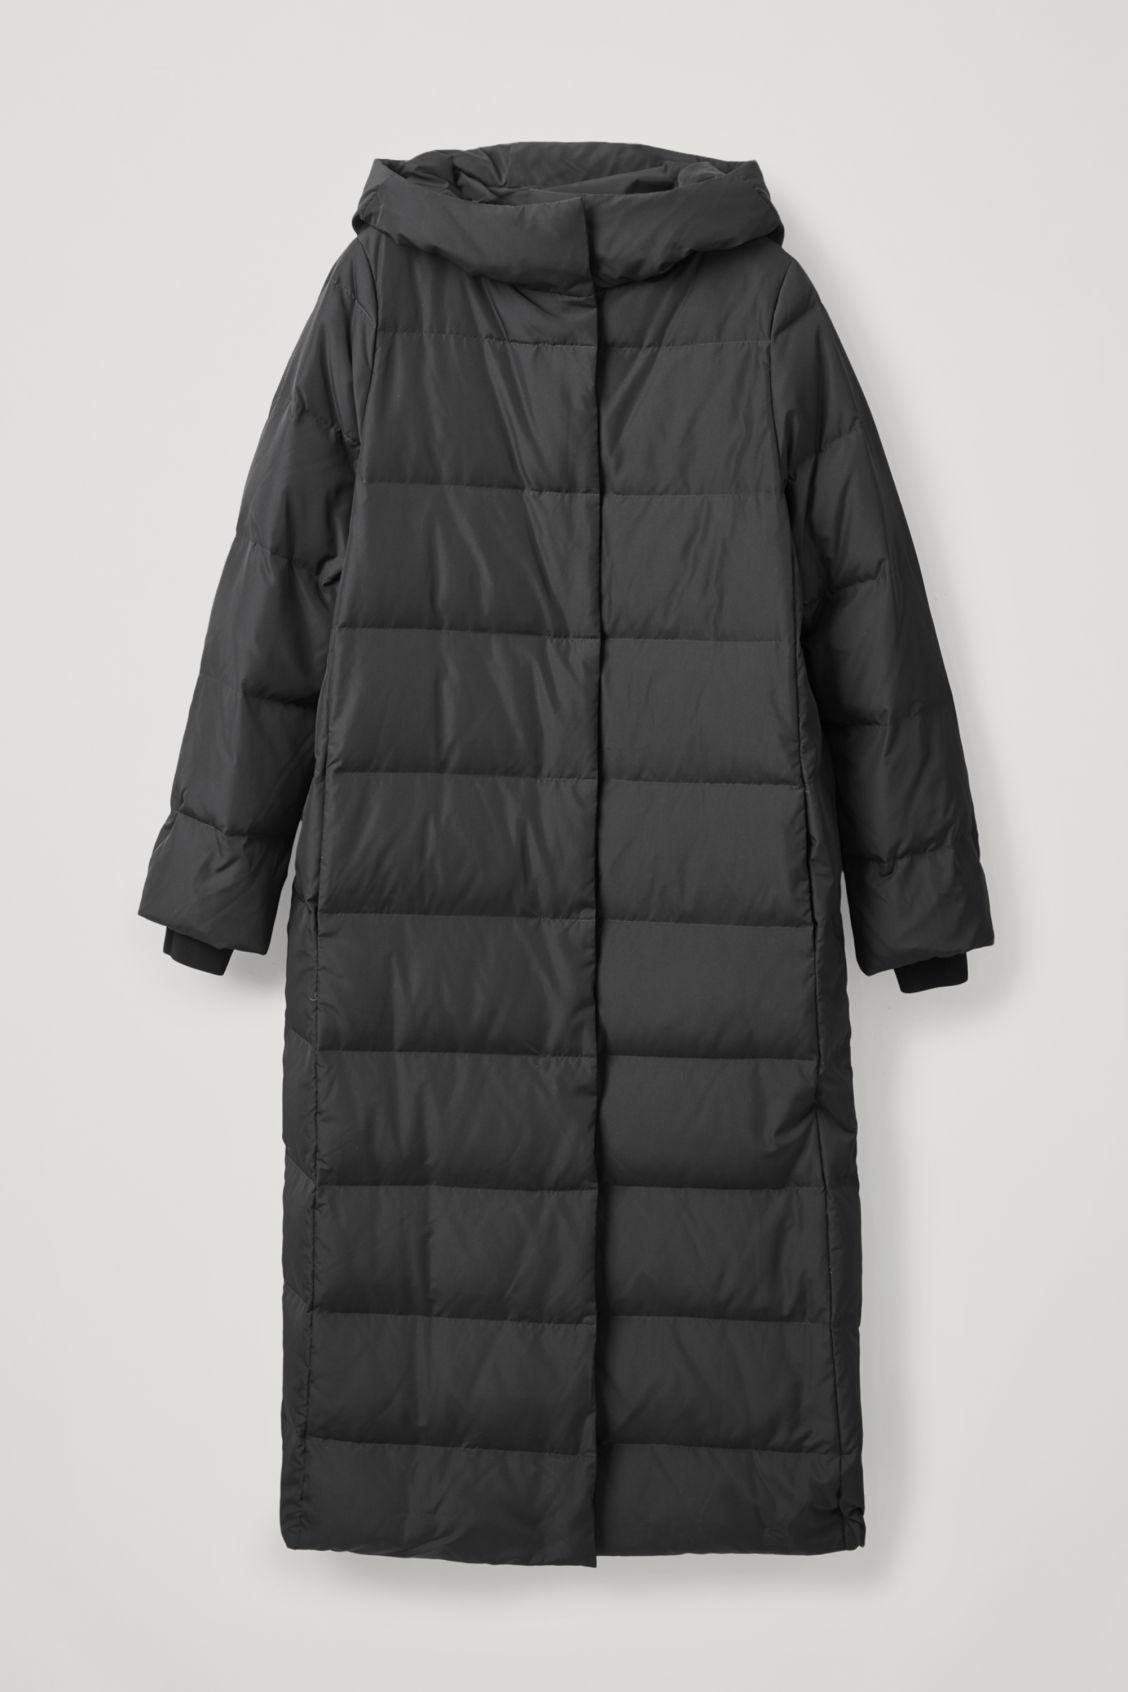 COS Hooded Long Puffer Coat in Black | Lyst